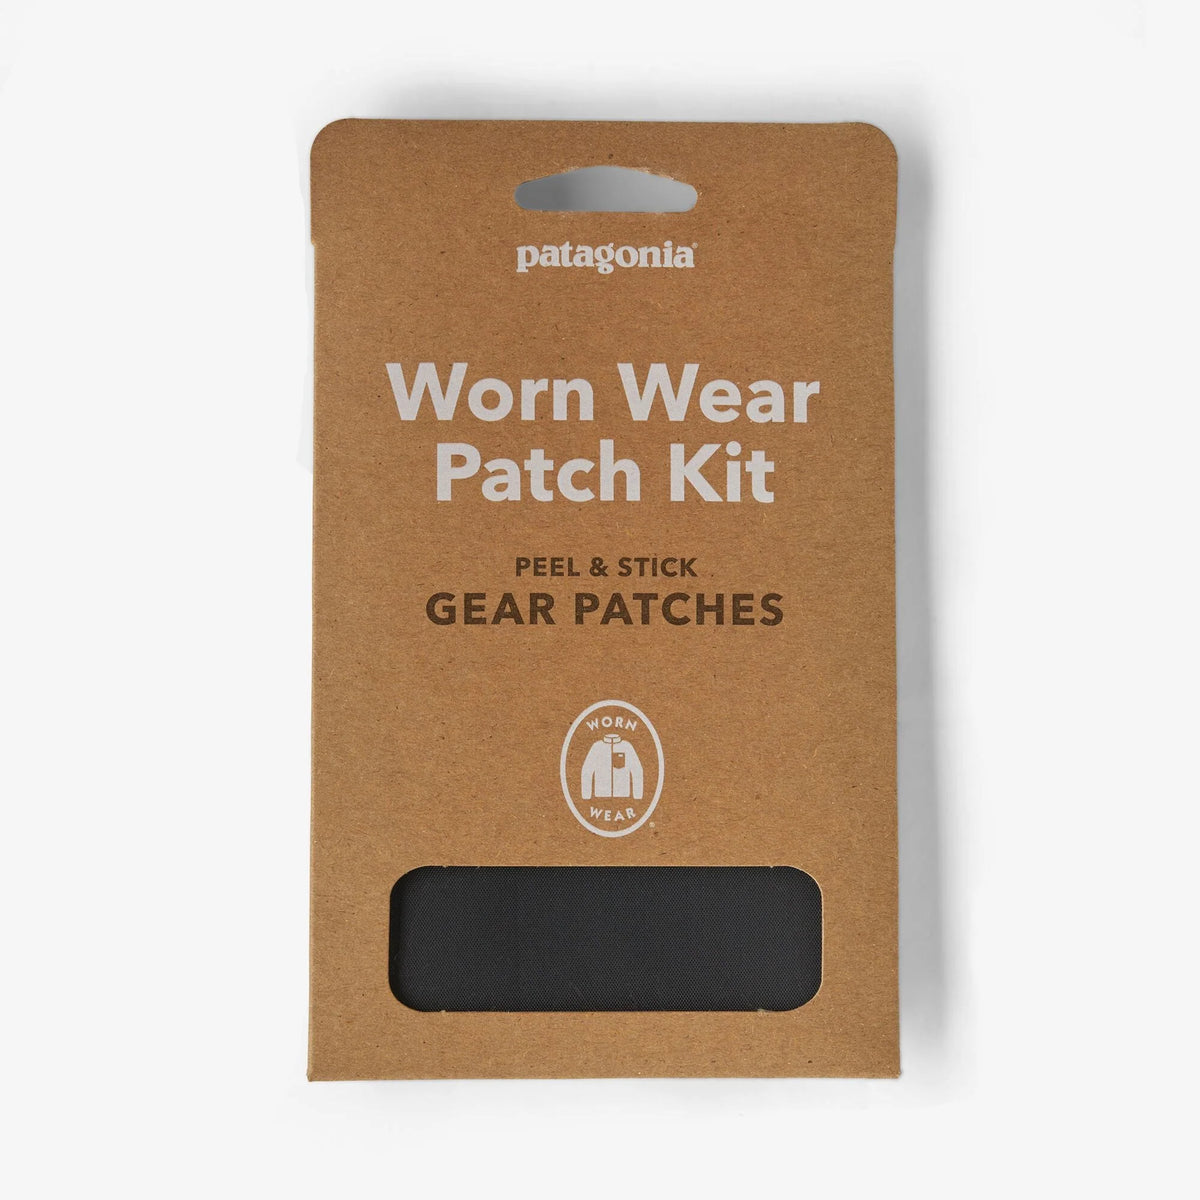 Patagonia Worn Wear Patch Kit - Find Your Feet Australia Hobart Launceston Tasmania